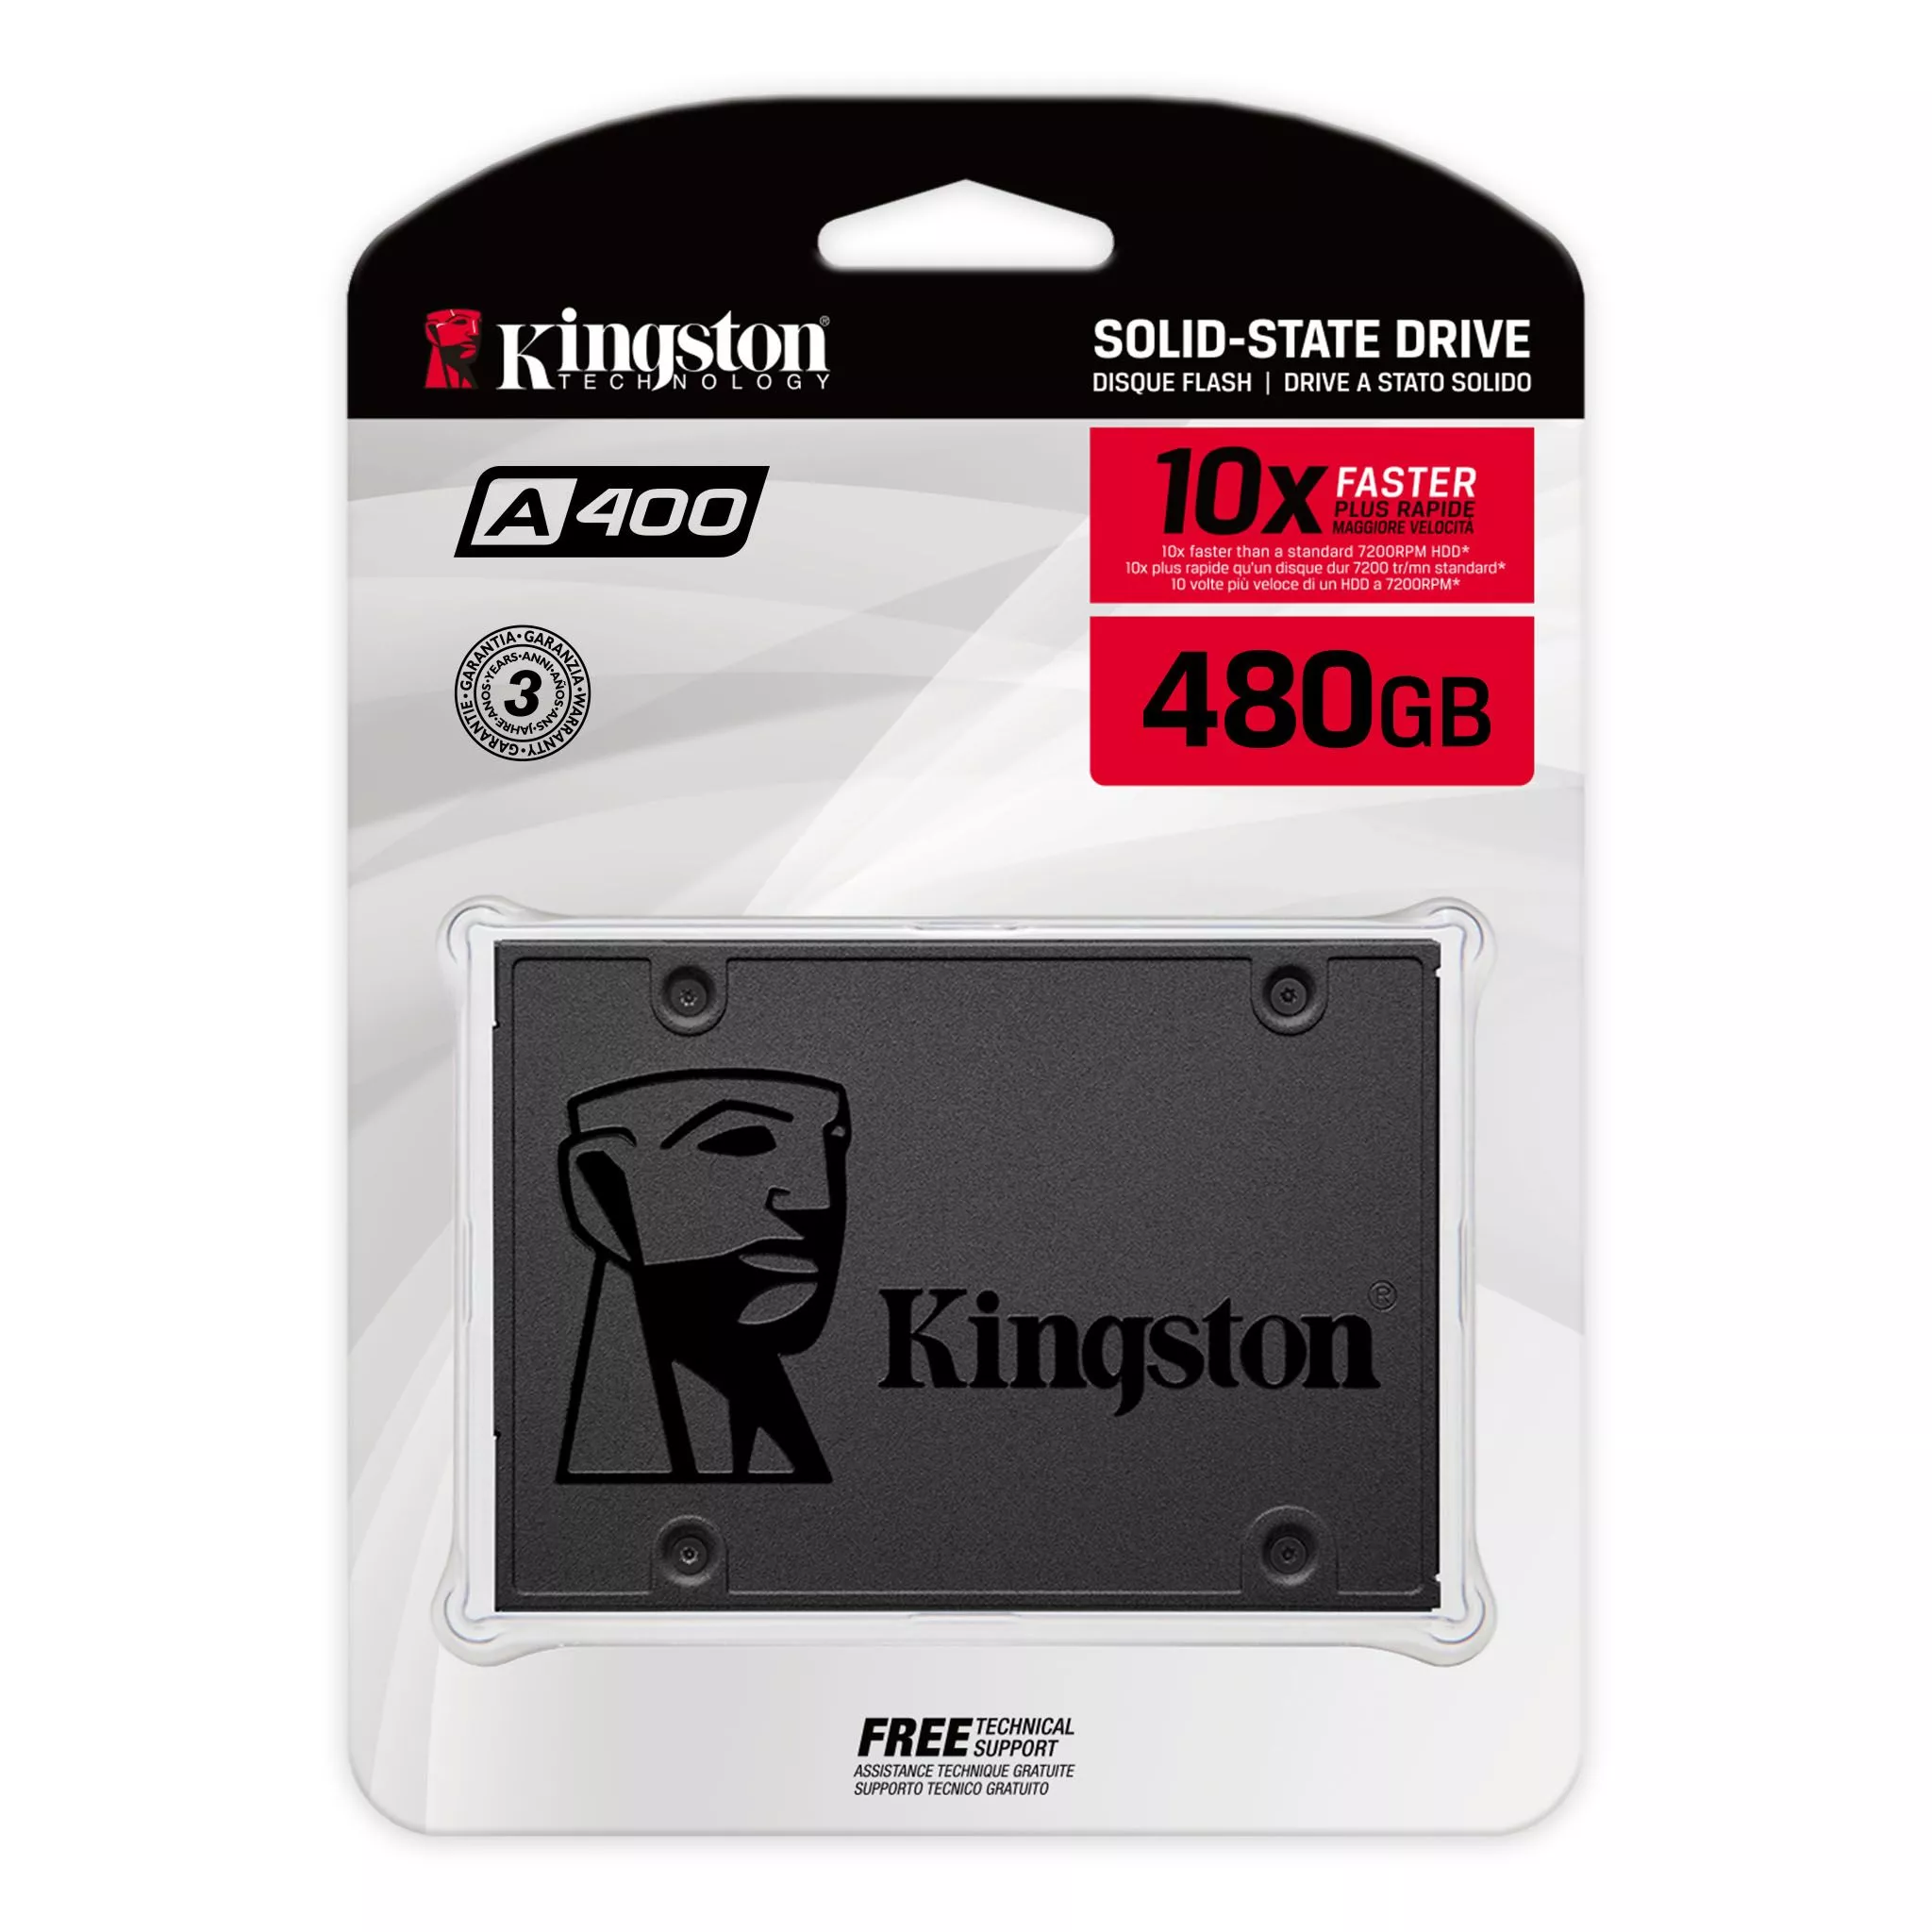 DISCO SSD KINGSTON 2 5 SATA A400 480GB TLC NAND STANDALONE DRIVE READ 500MB S AND WRITE 450MB S